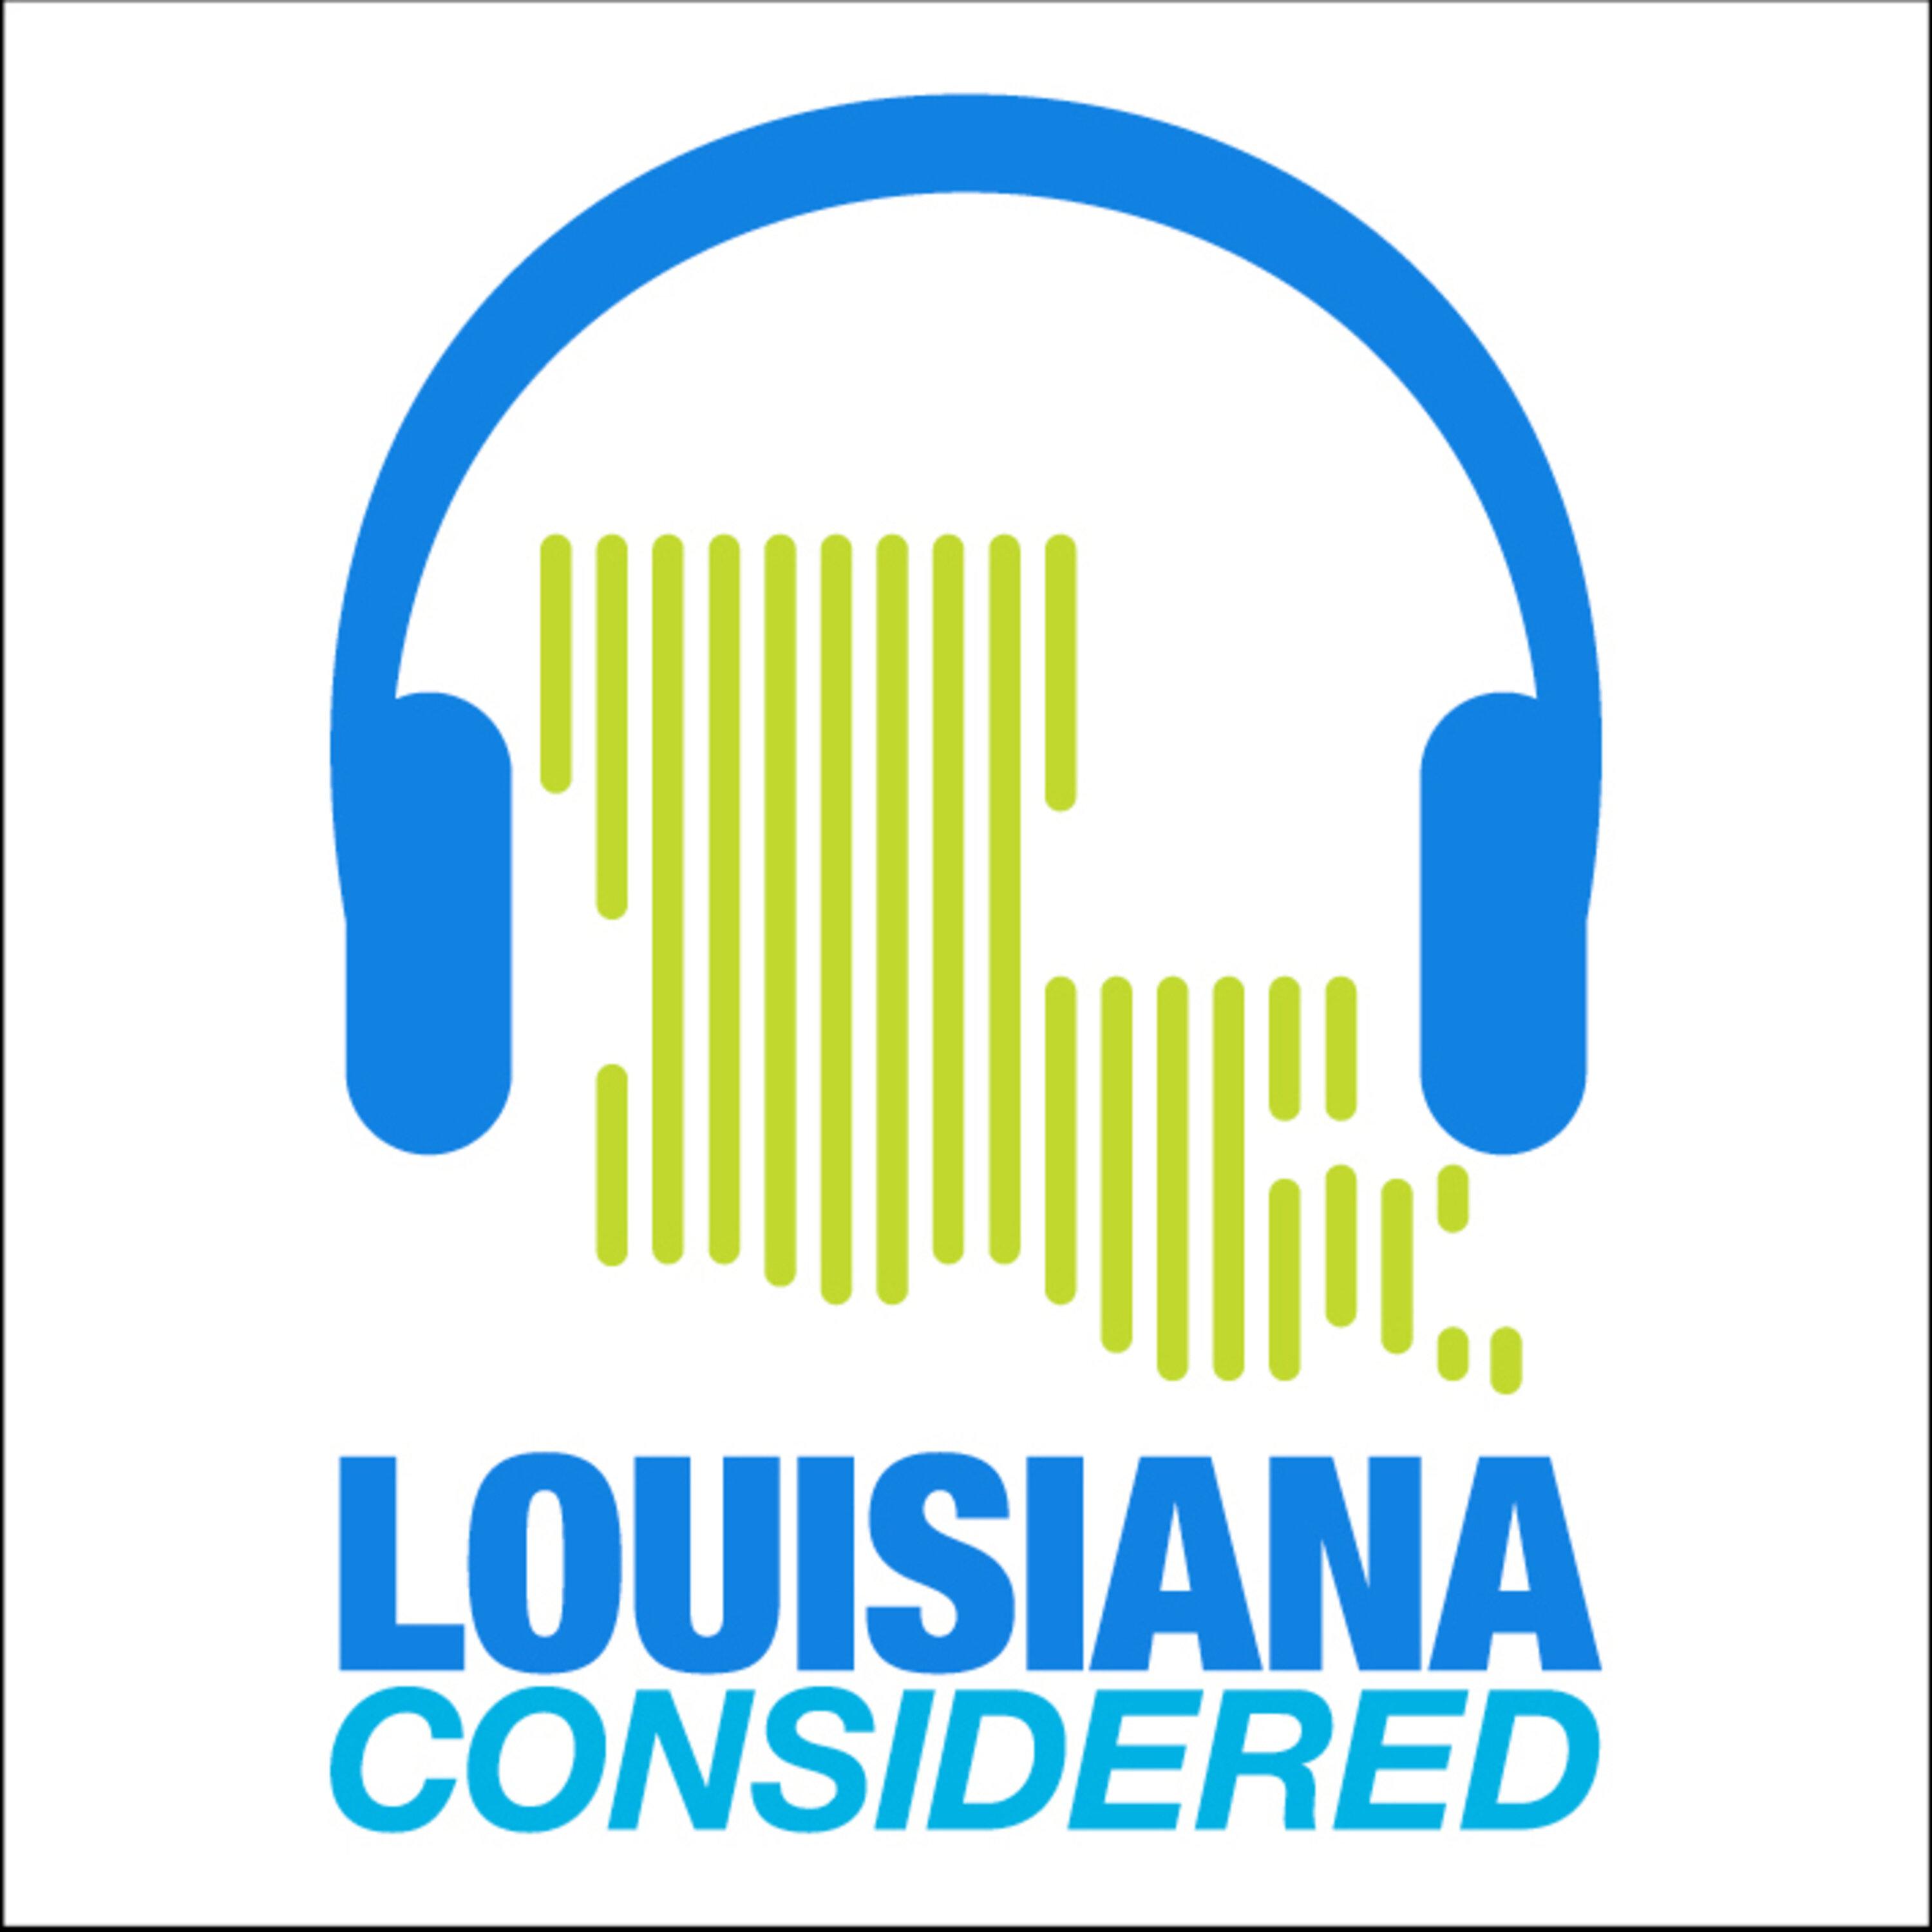 Thumbnail for "Louisiana Considered: How Scholars Study Disasters, Louisiana Schools Begin Recovery From Hurricane Ida".